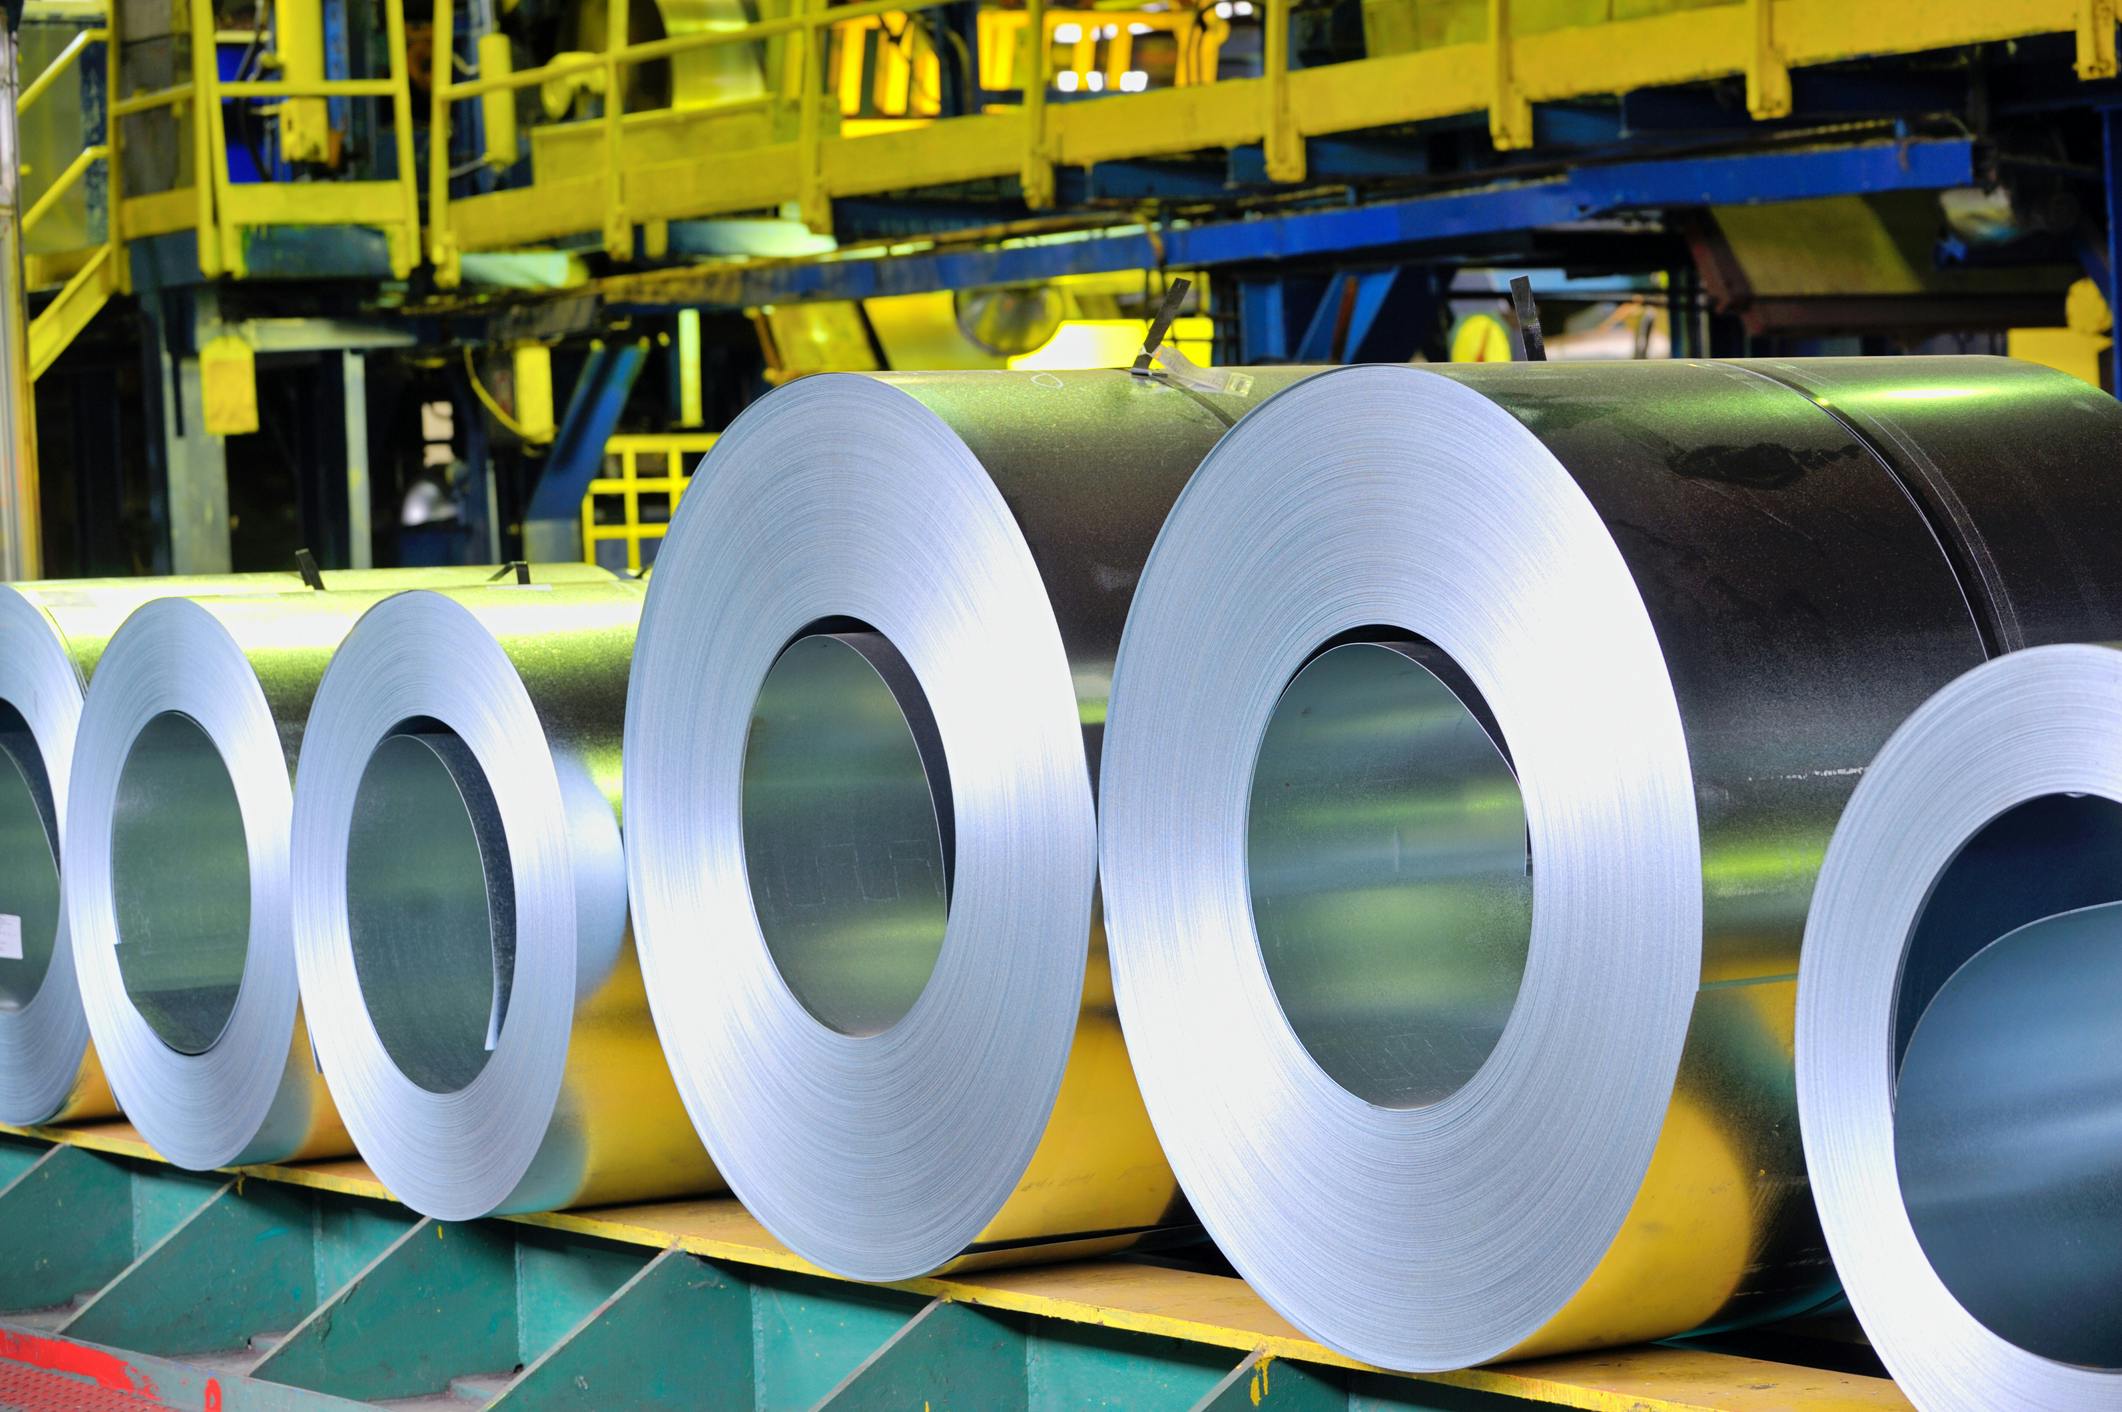 H2 Green Steel raises €1.5 billion in equity to build the world's first green  steel plant — H2 Green Steel